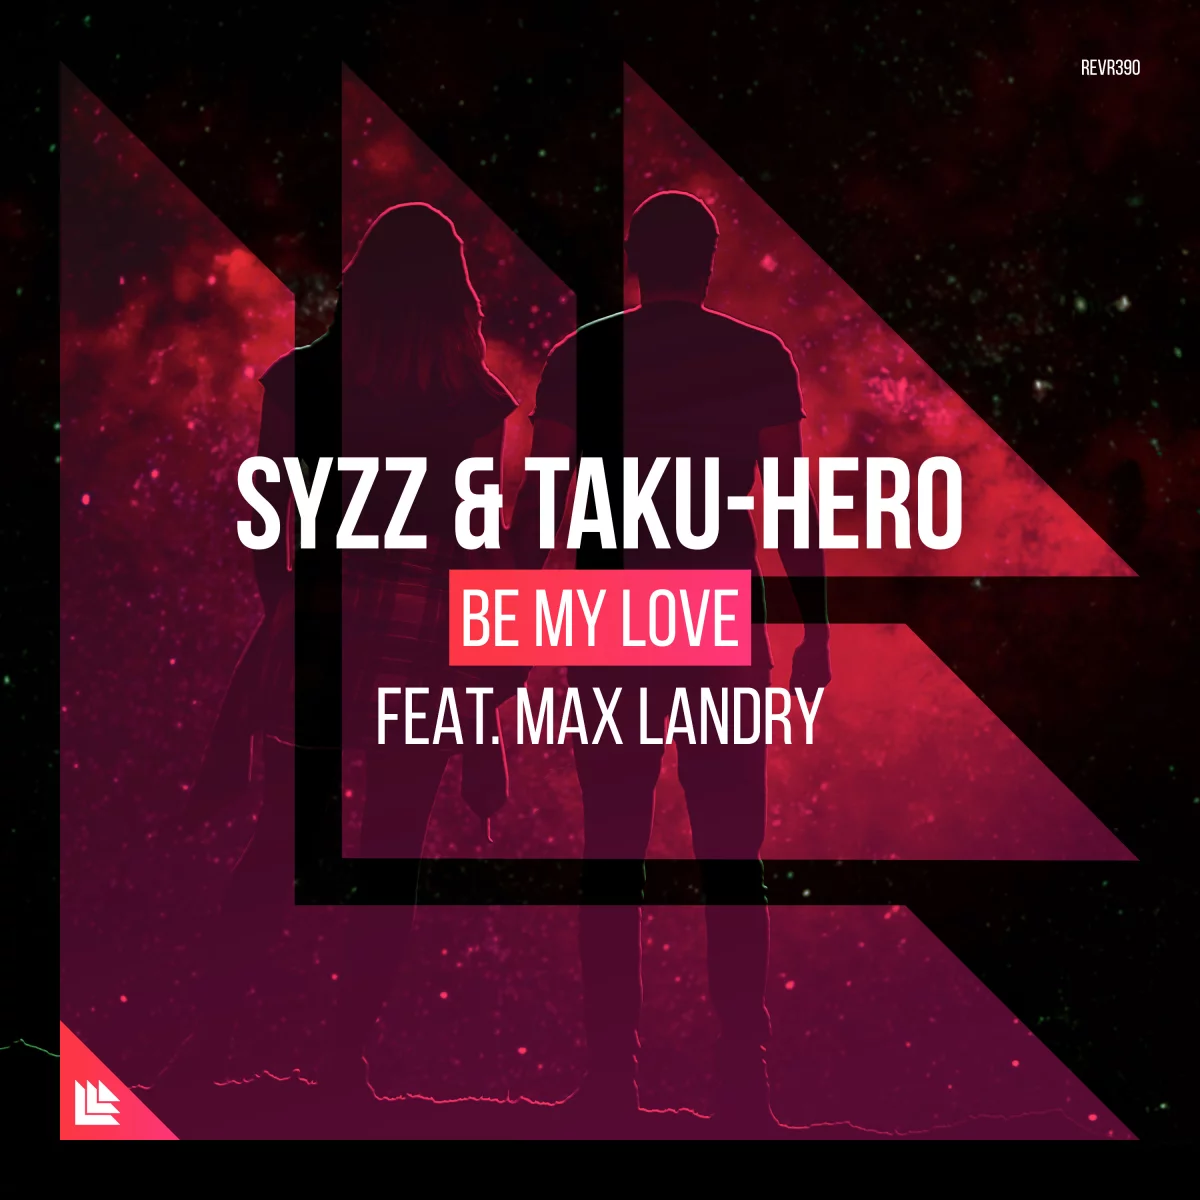 Be My Love - Syzz⁠ & Taku-Hero⁠ feat. Max Landry⁠ 